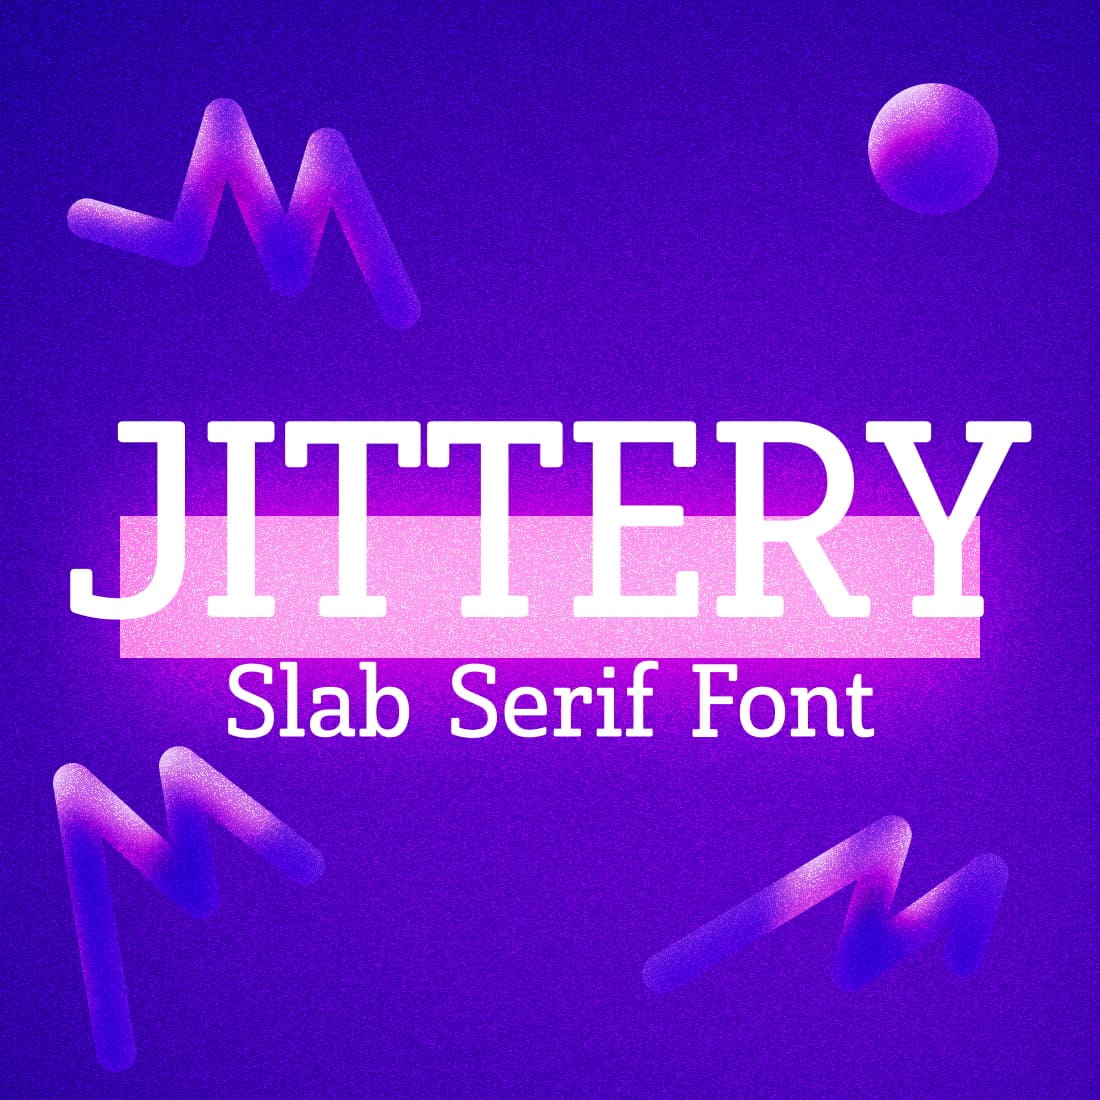 Jittery Slab Serif Font main cover by MasterBundles.